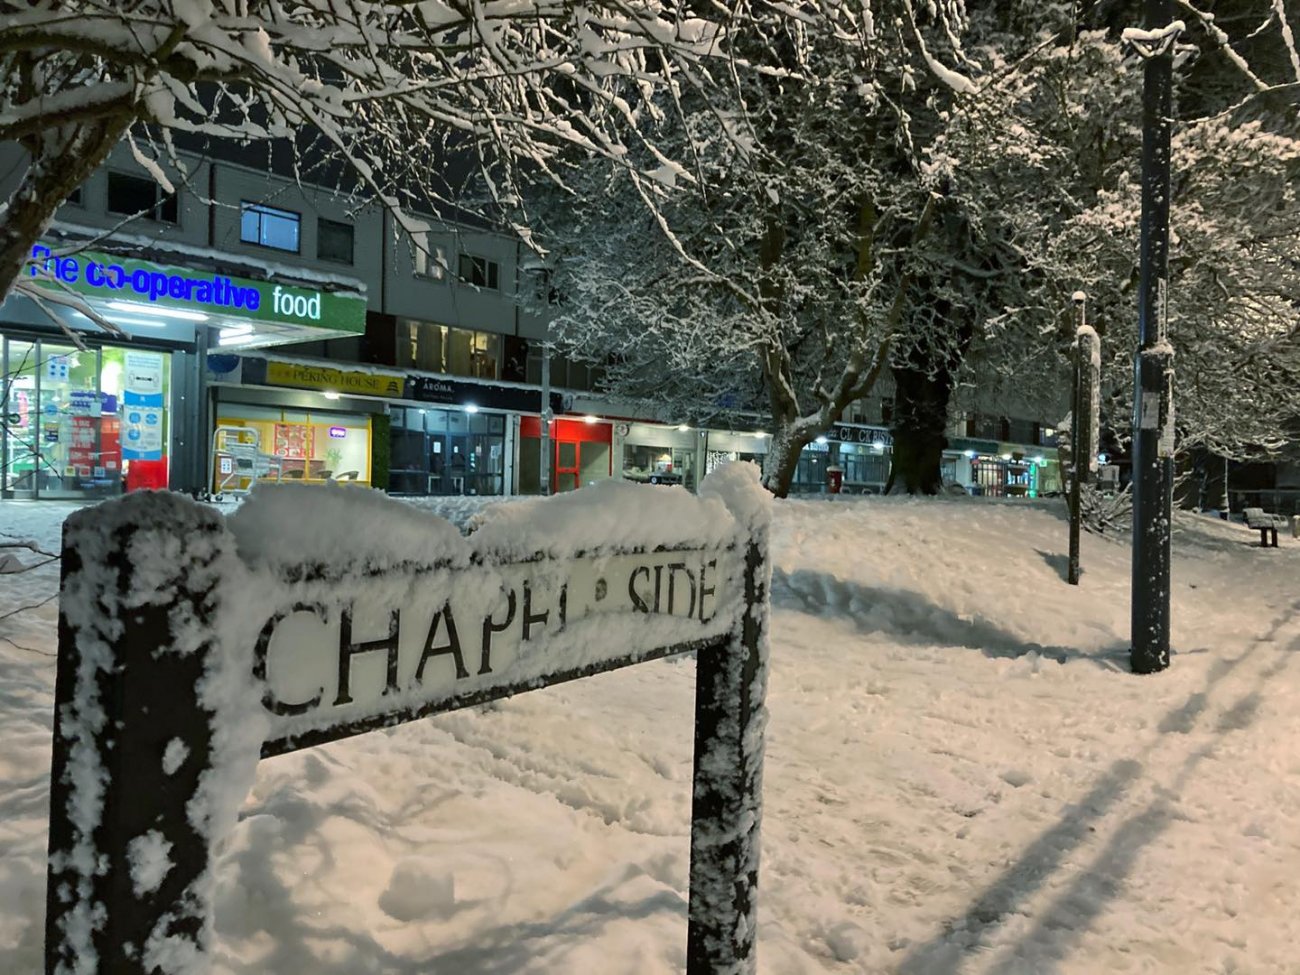 Photograph of Snowy Spondon Nights - Chapelside